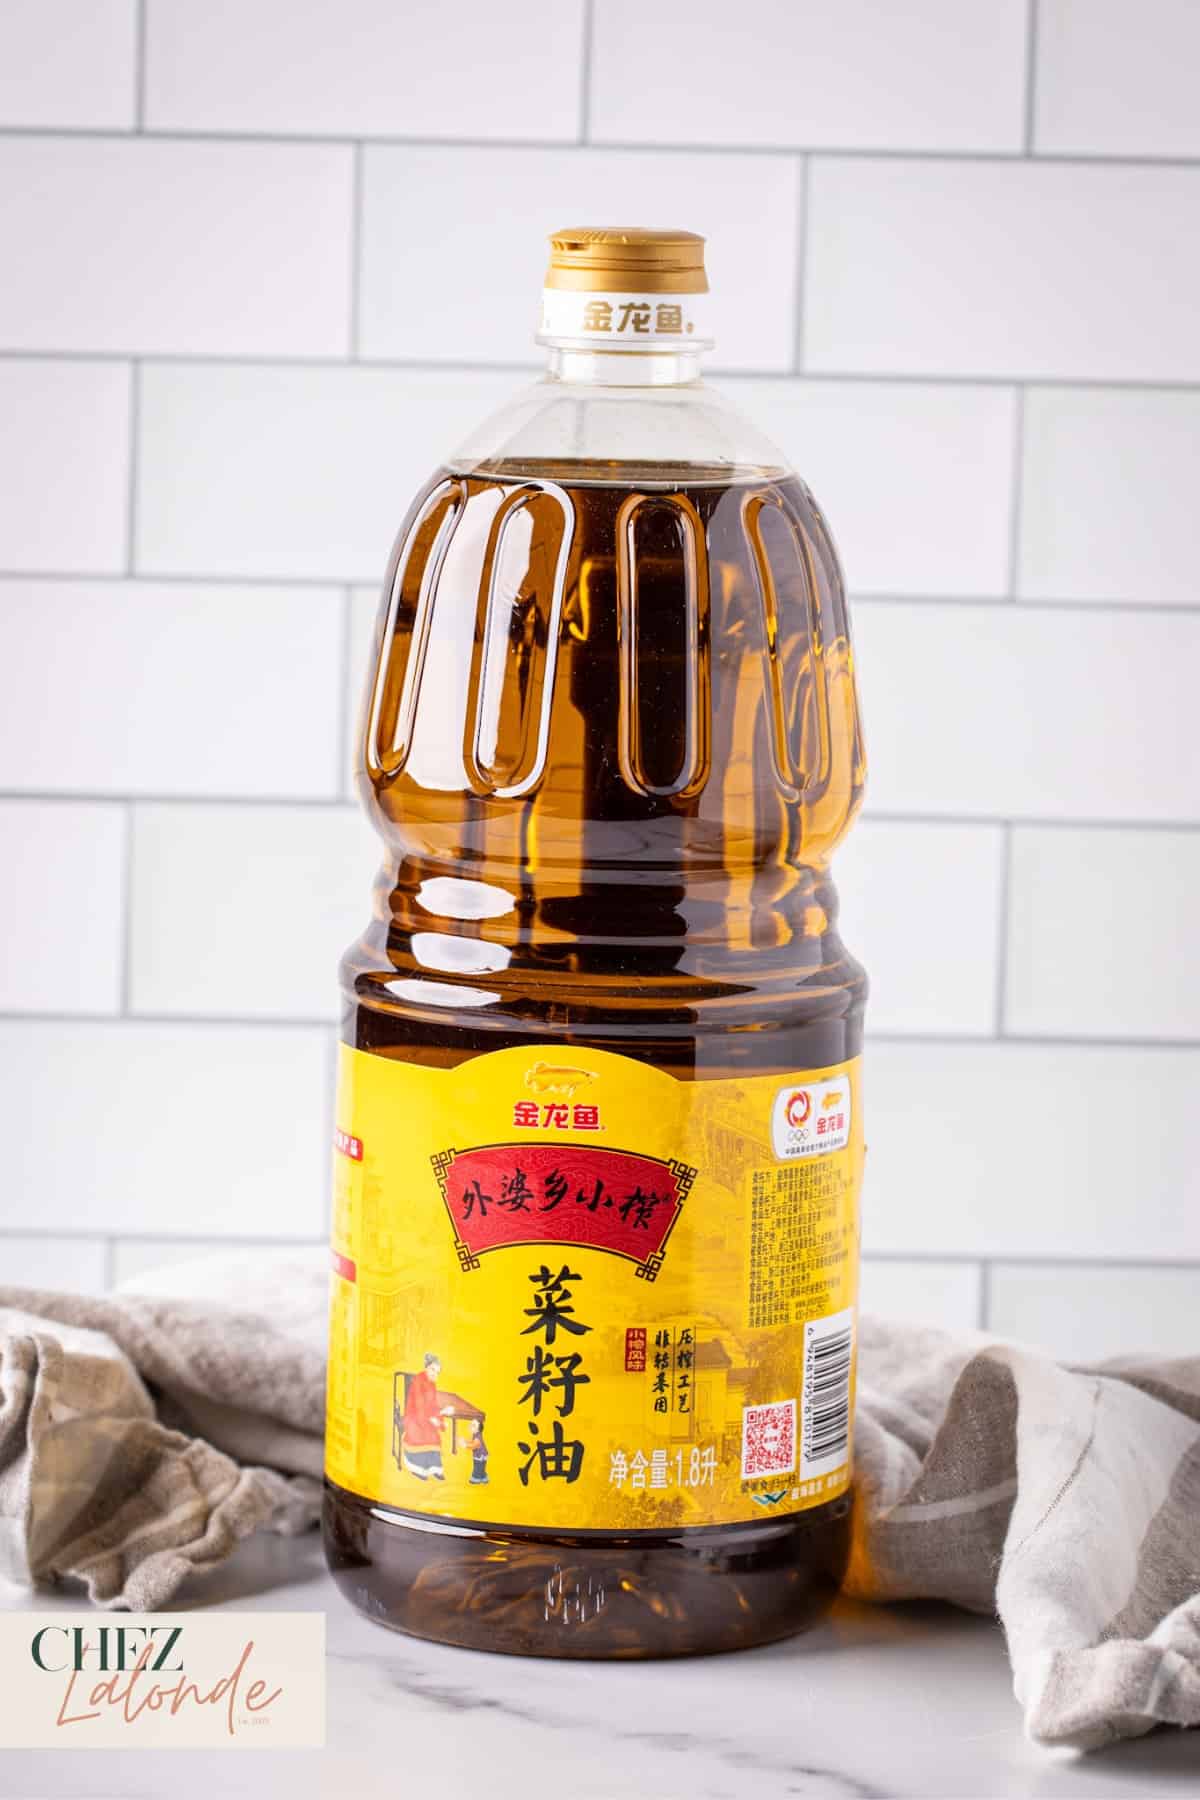 A bottle of Rapeseed oil.